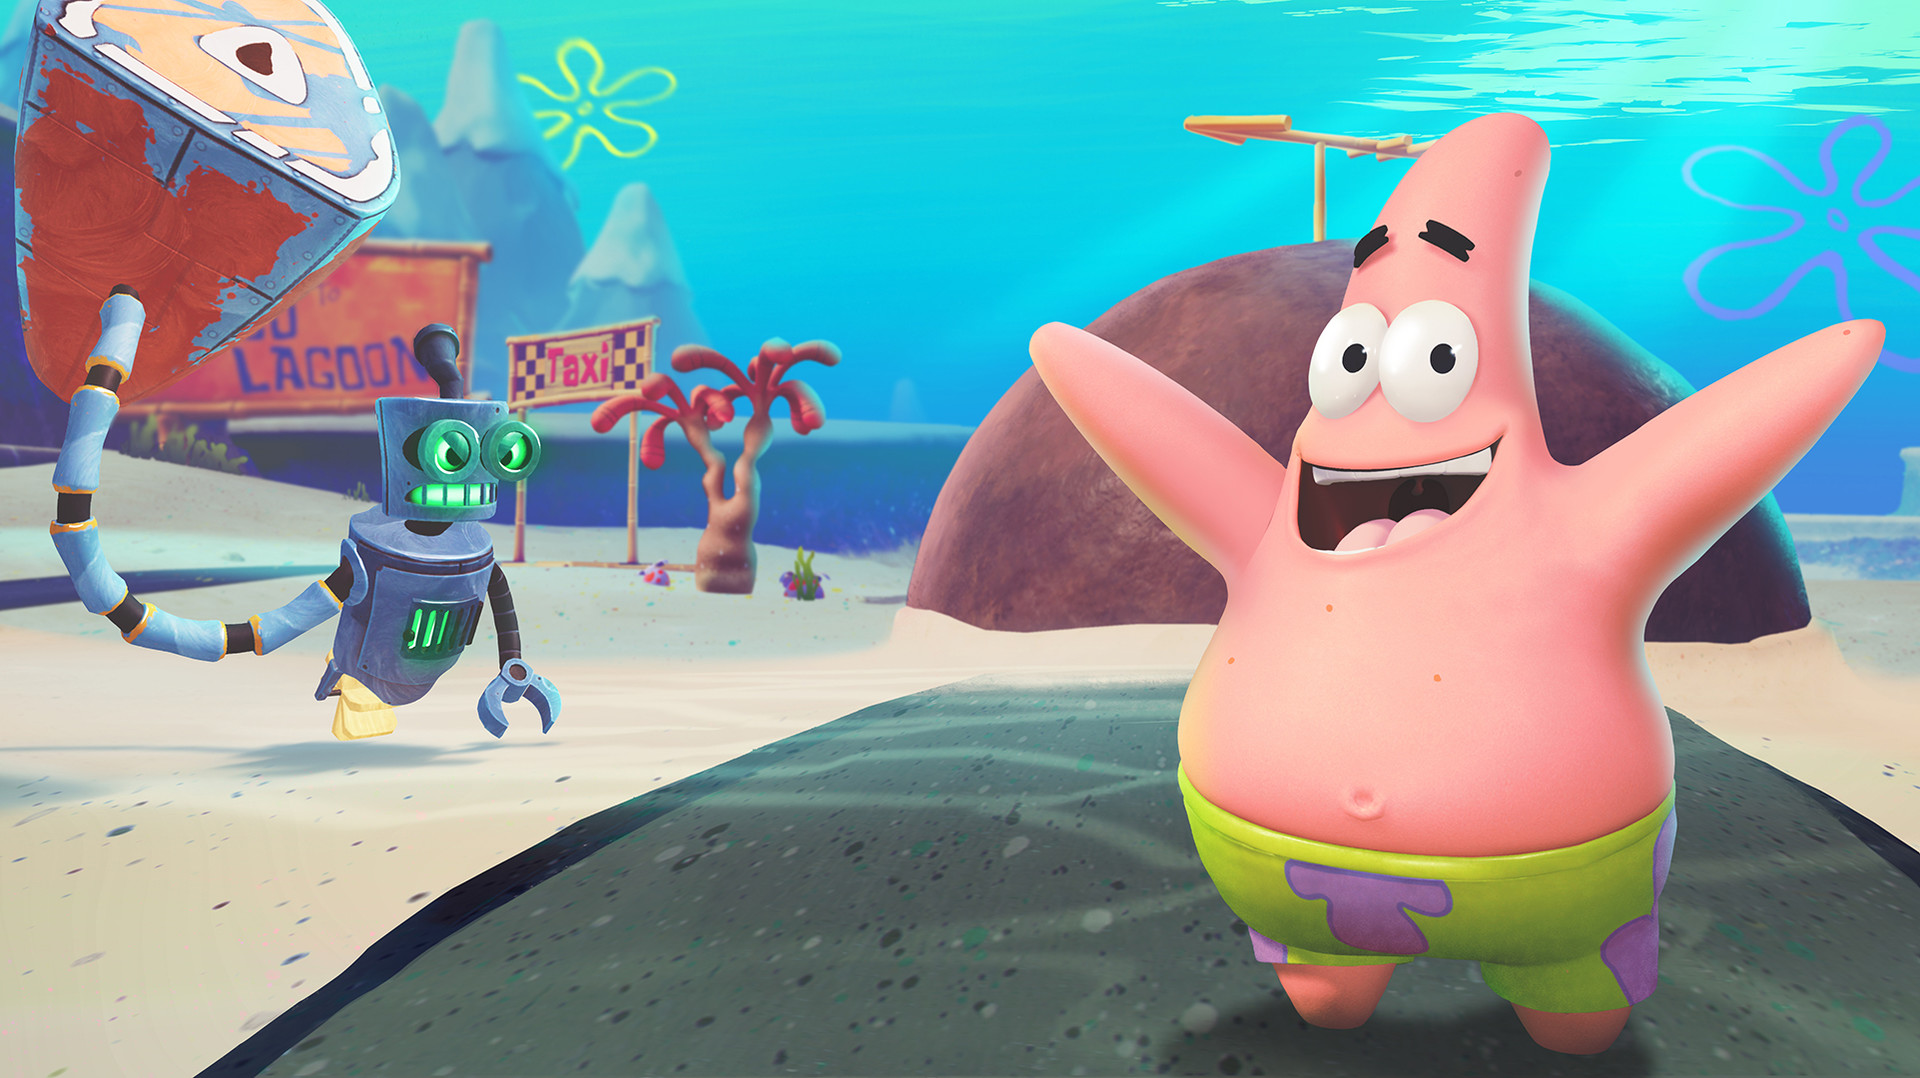 Steam - SpongeBob SquarePants: Battle for Bikini Bottom - Rehydrated